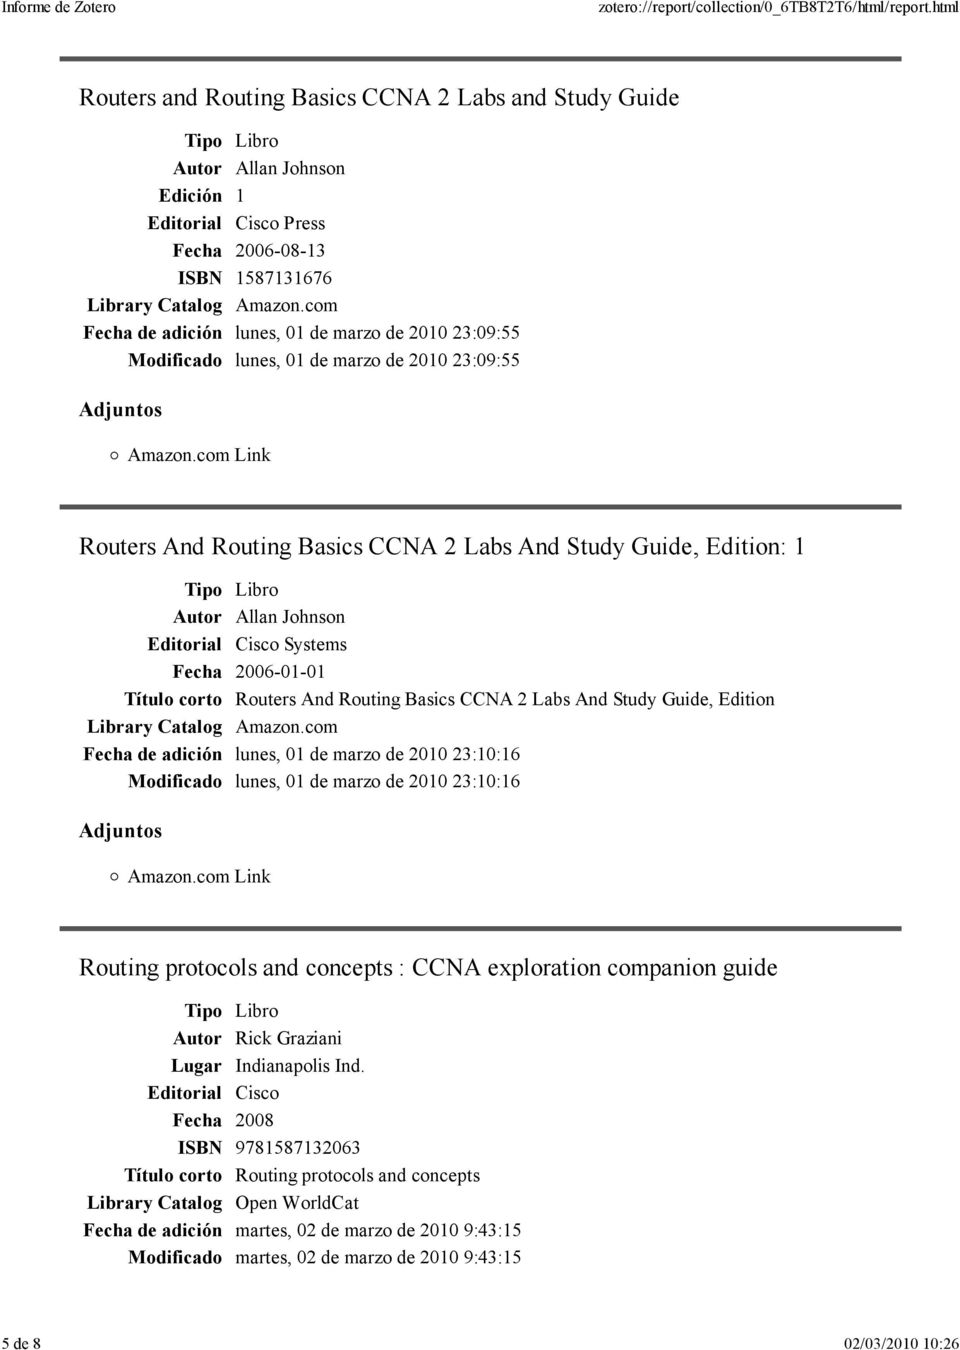 corto Routers And Routing Basics CCNA 2 Labs And Study Guide, Edition Fecha de adición lunes, 01 de marzo de 2010 23:10:16 Modificado lunes, 01 de marzo de 2010 23:10:16 Routing protocols and